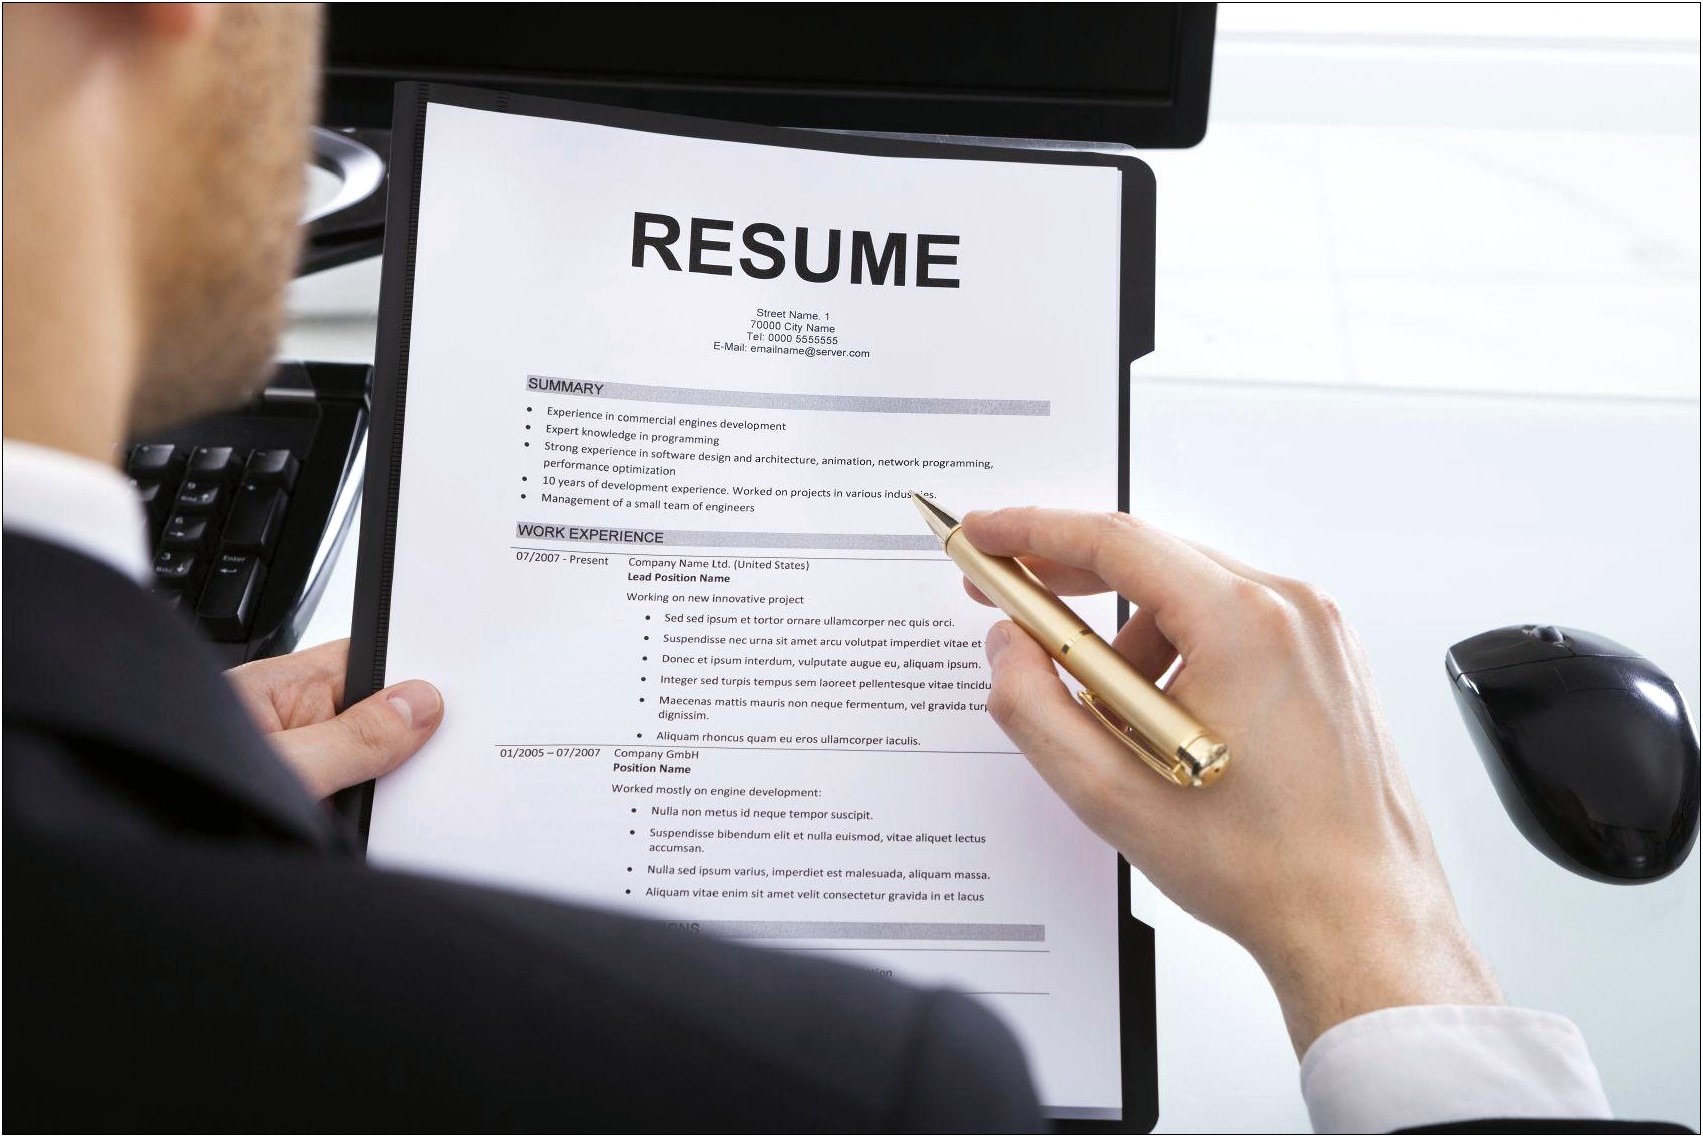 Tips For Listing Skills On Resume